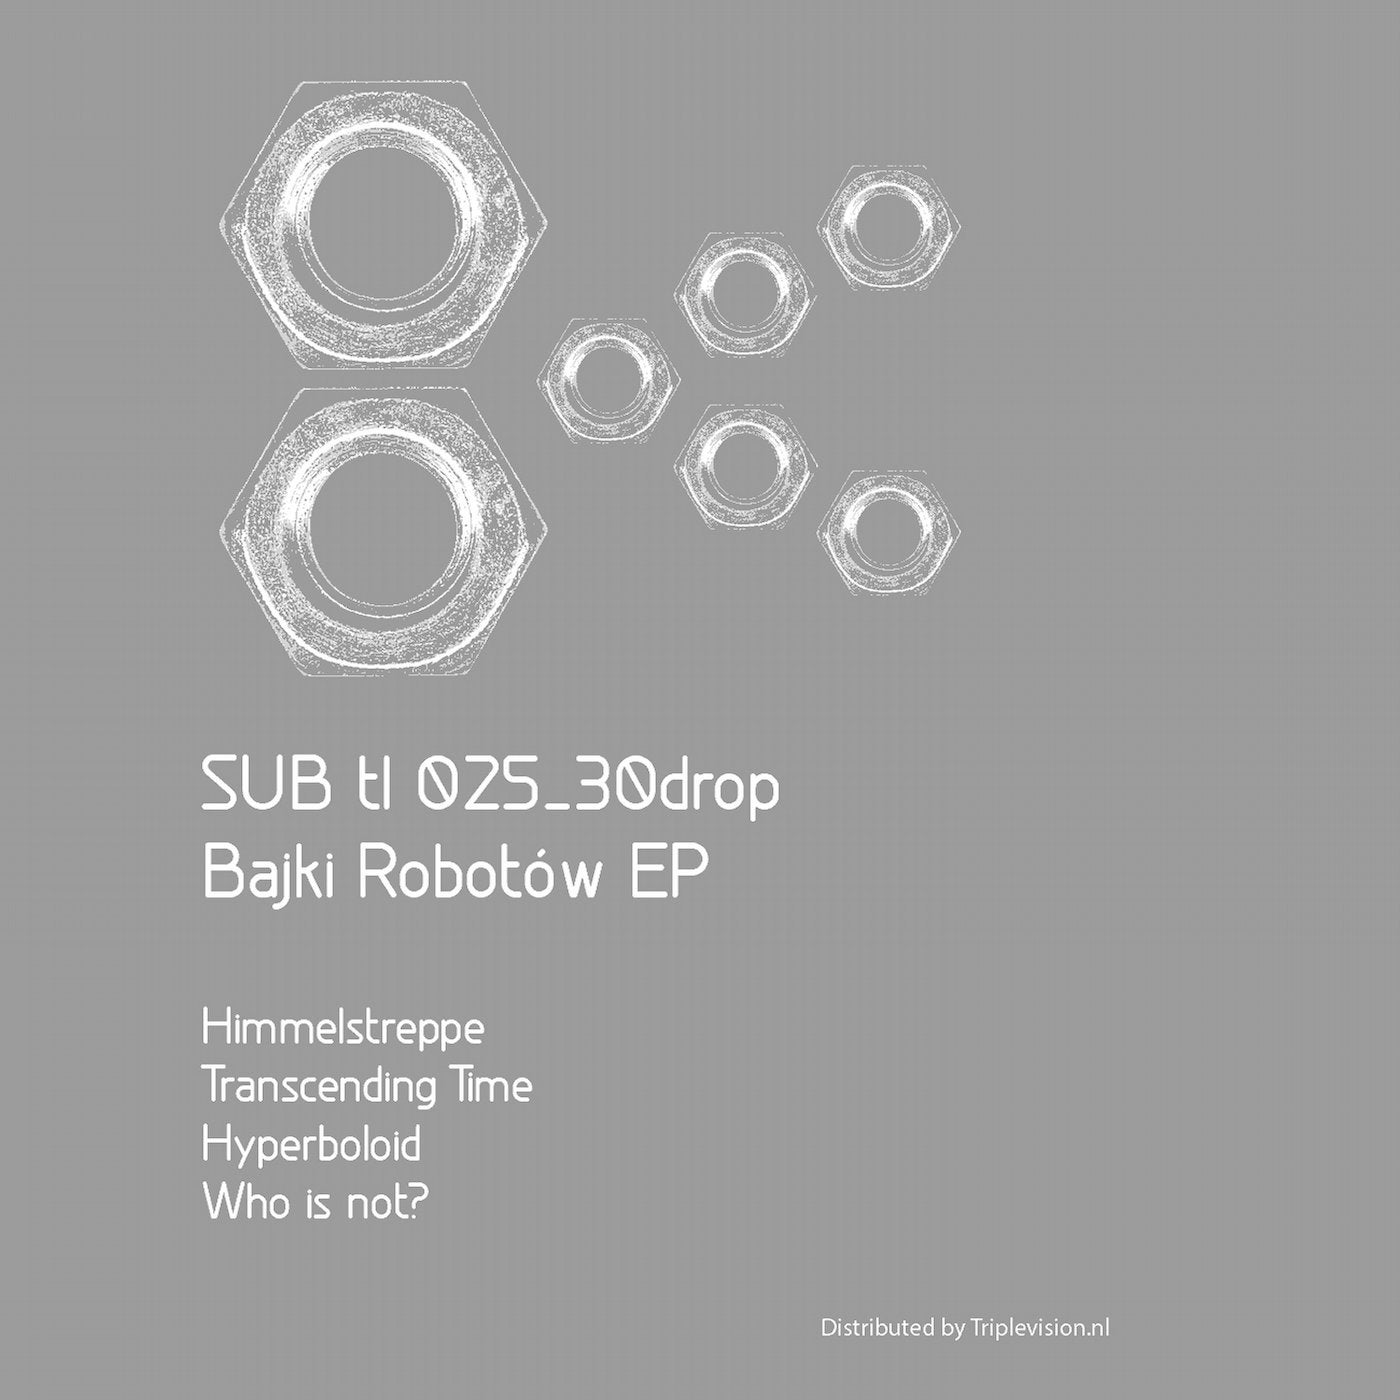 Bajki Robotow EP